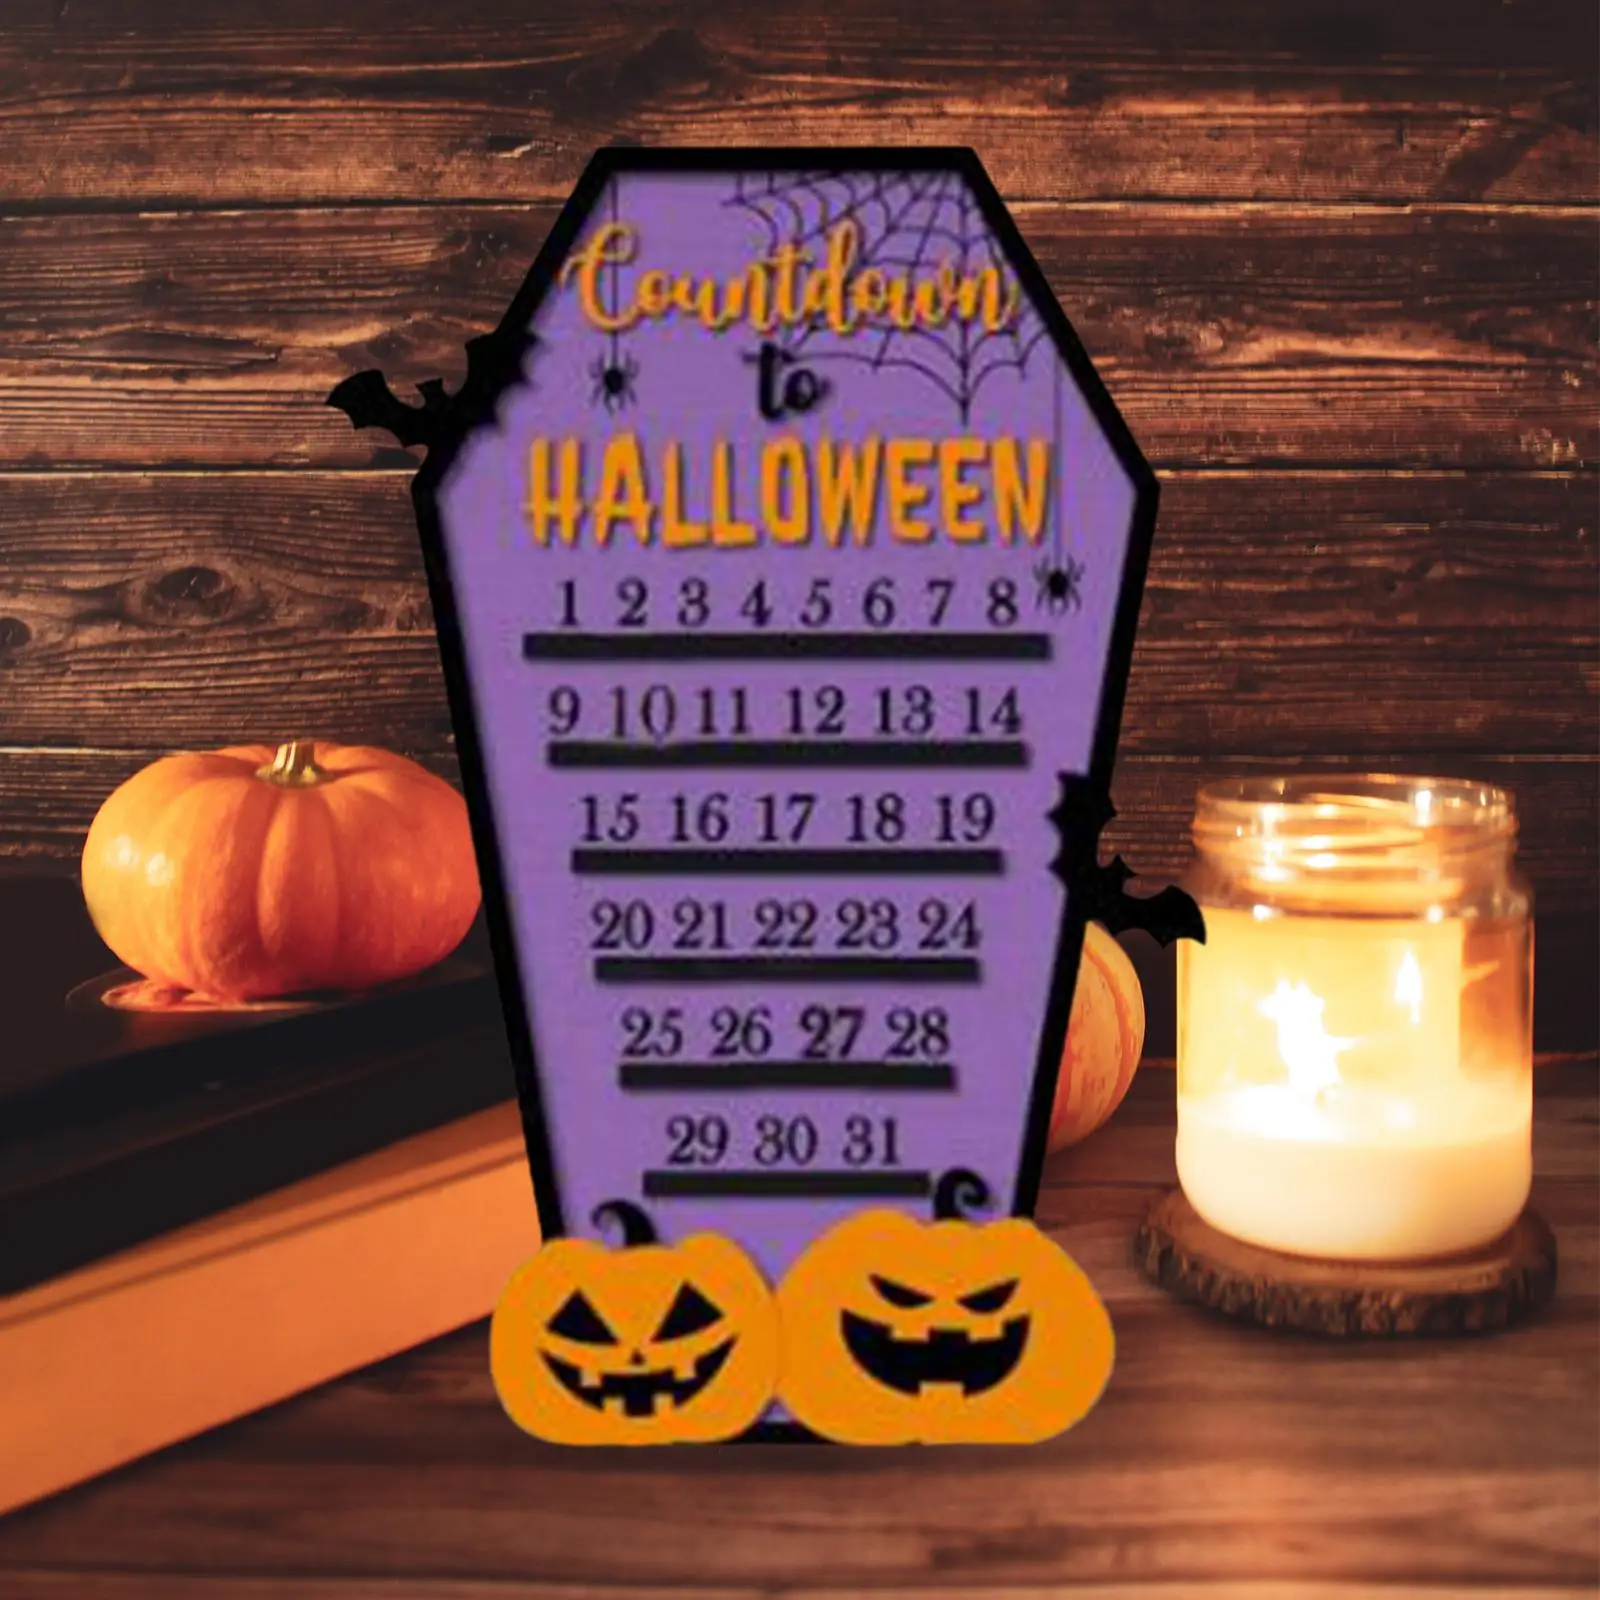 Halloween Calendar Wooden Calendar Halloween Countdown Sign DIY Moving Wooden Block for Haunted Home Festive Holiday Decor